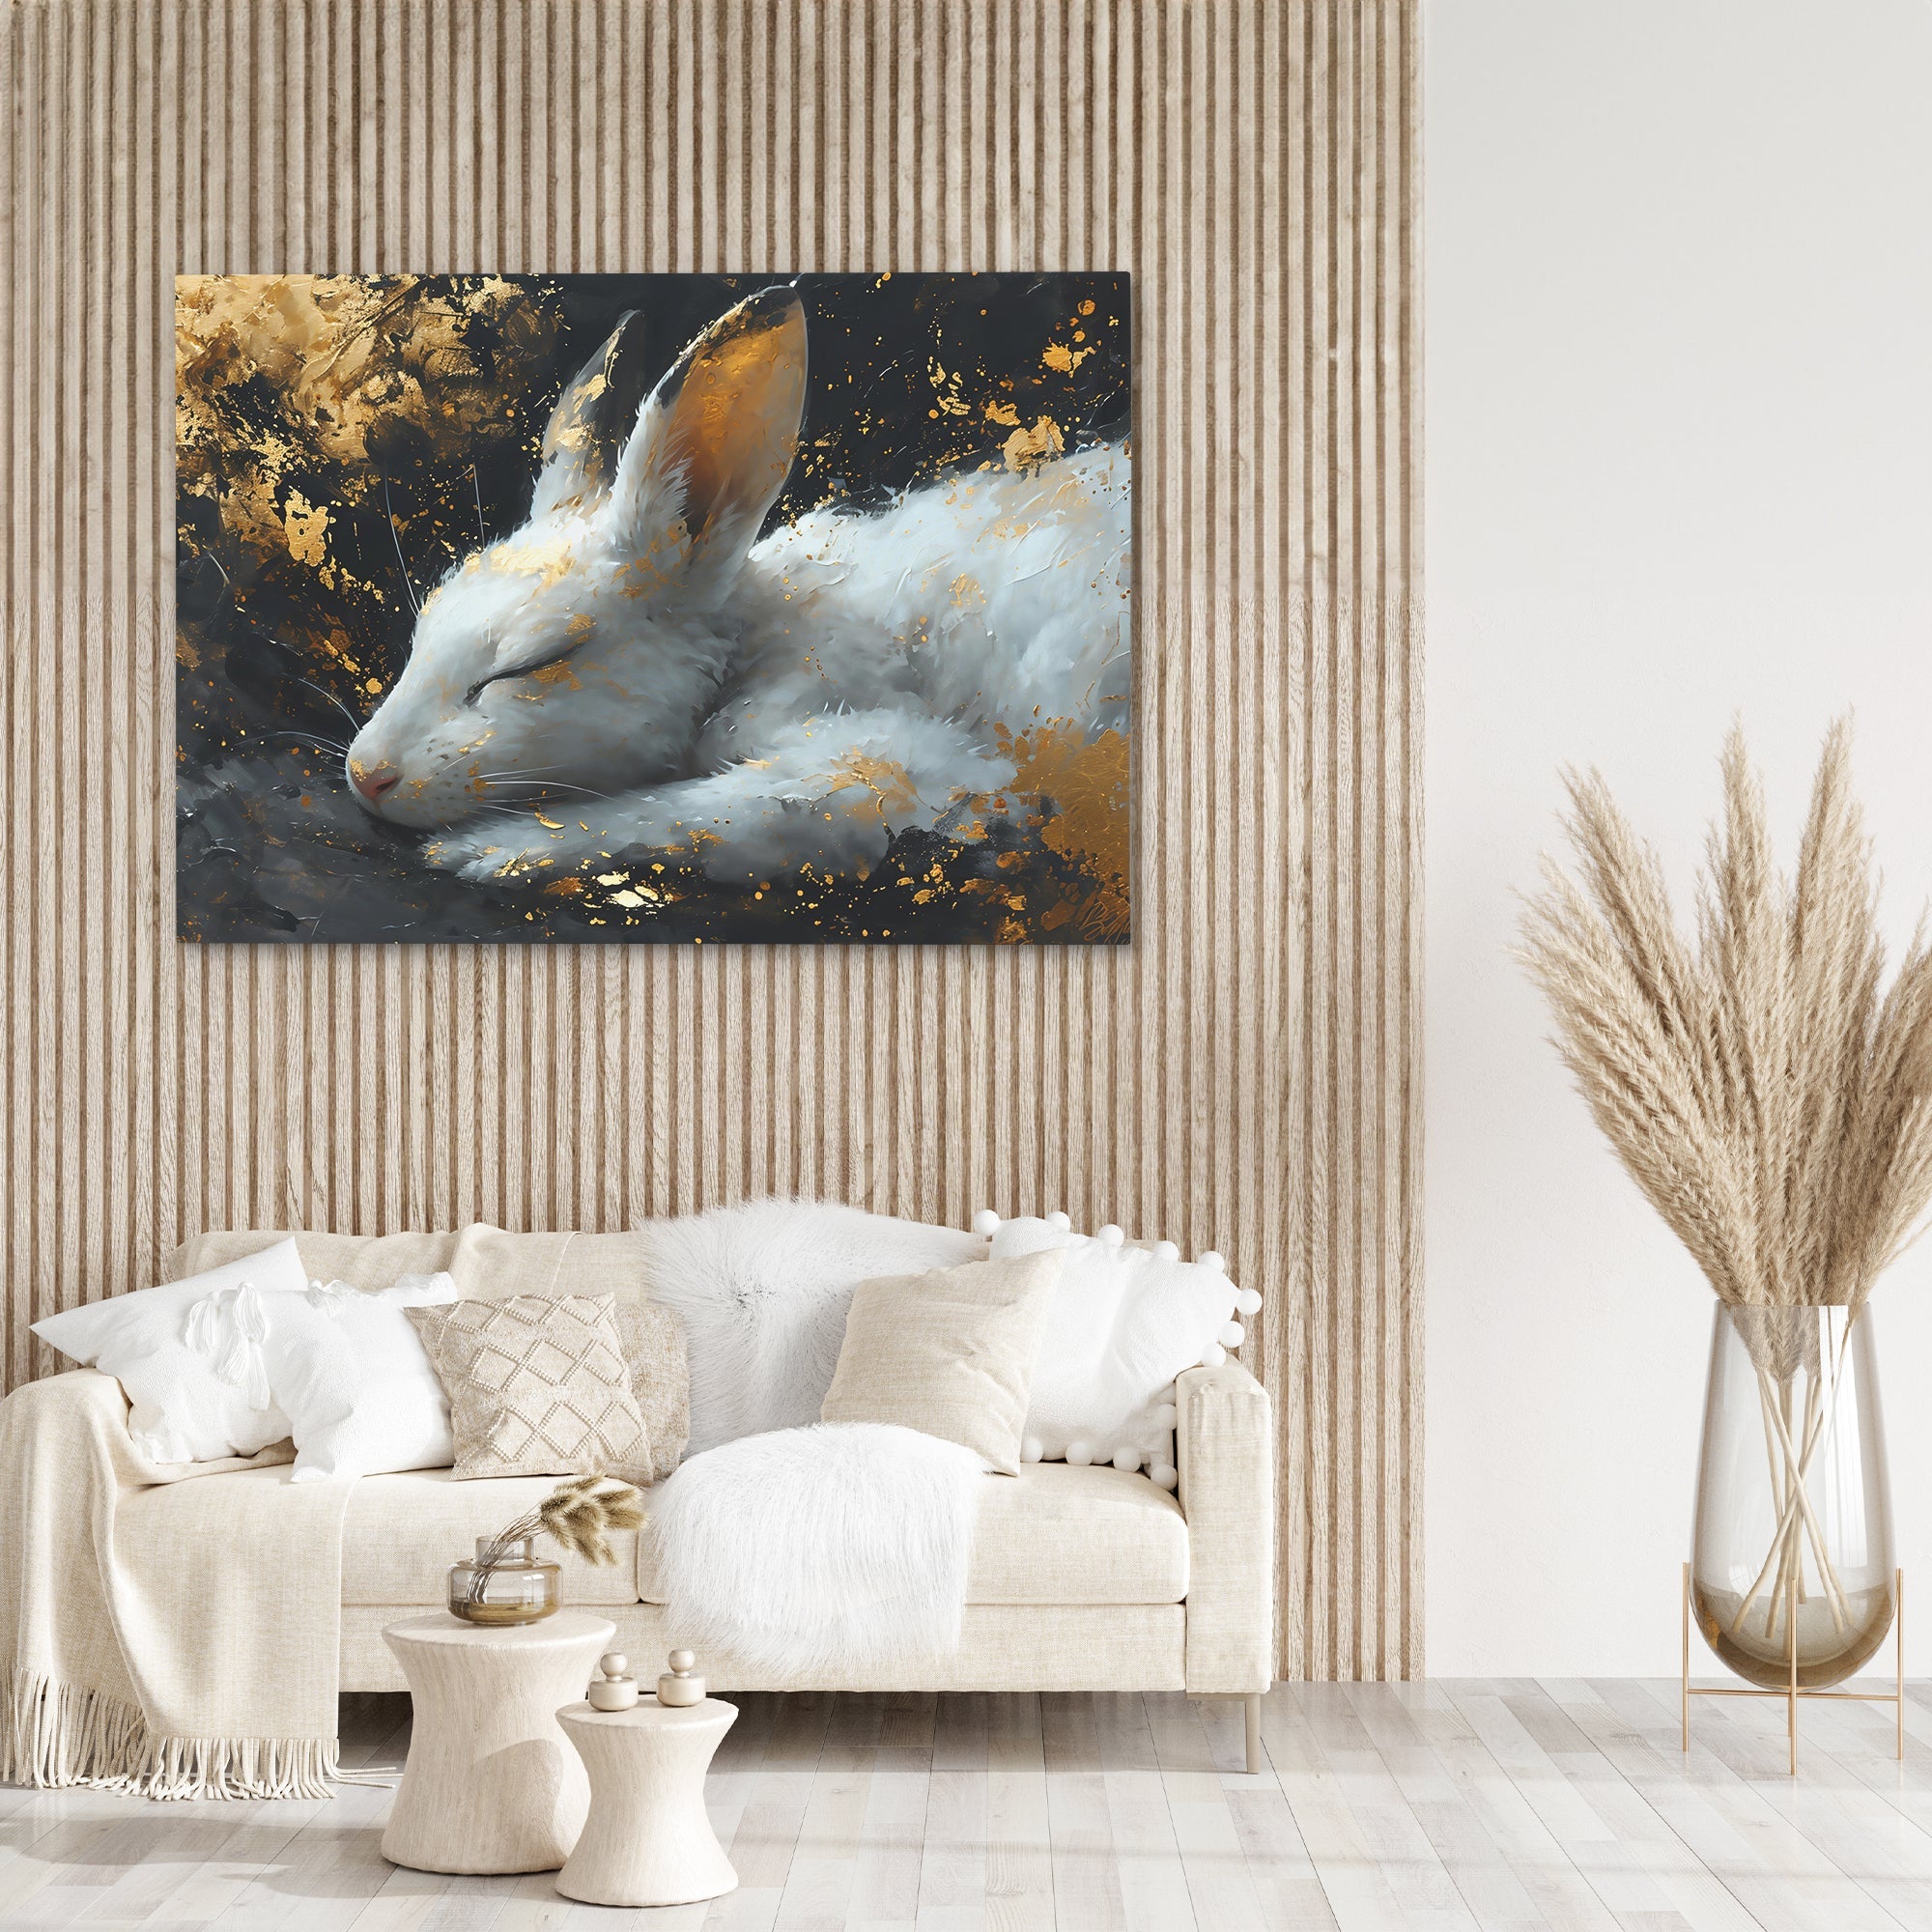 Sleeping Rabbit - Luxury Wall Art